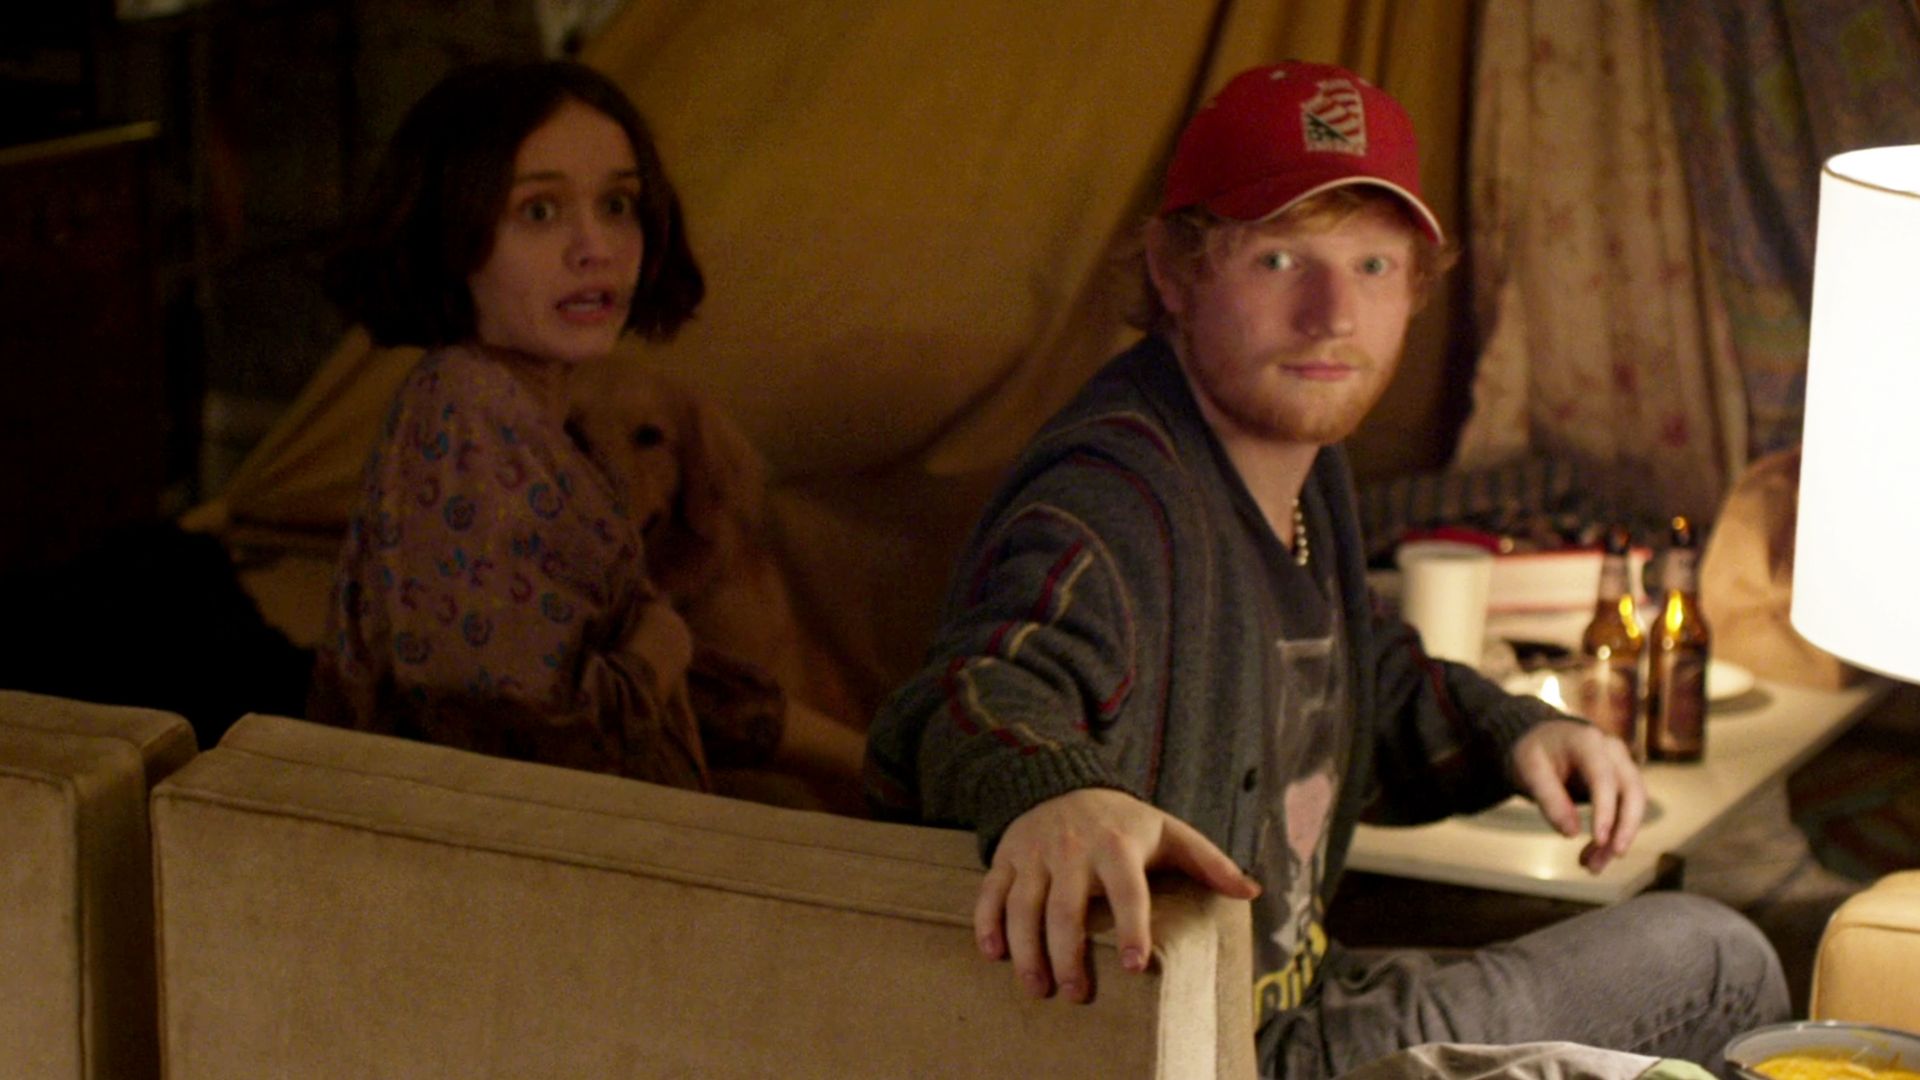 Ed Sheeran's cameo in the series Modern Love